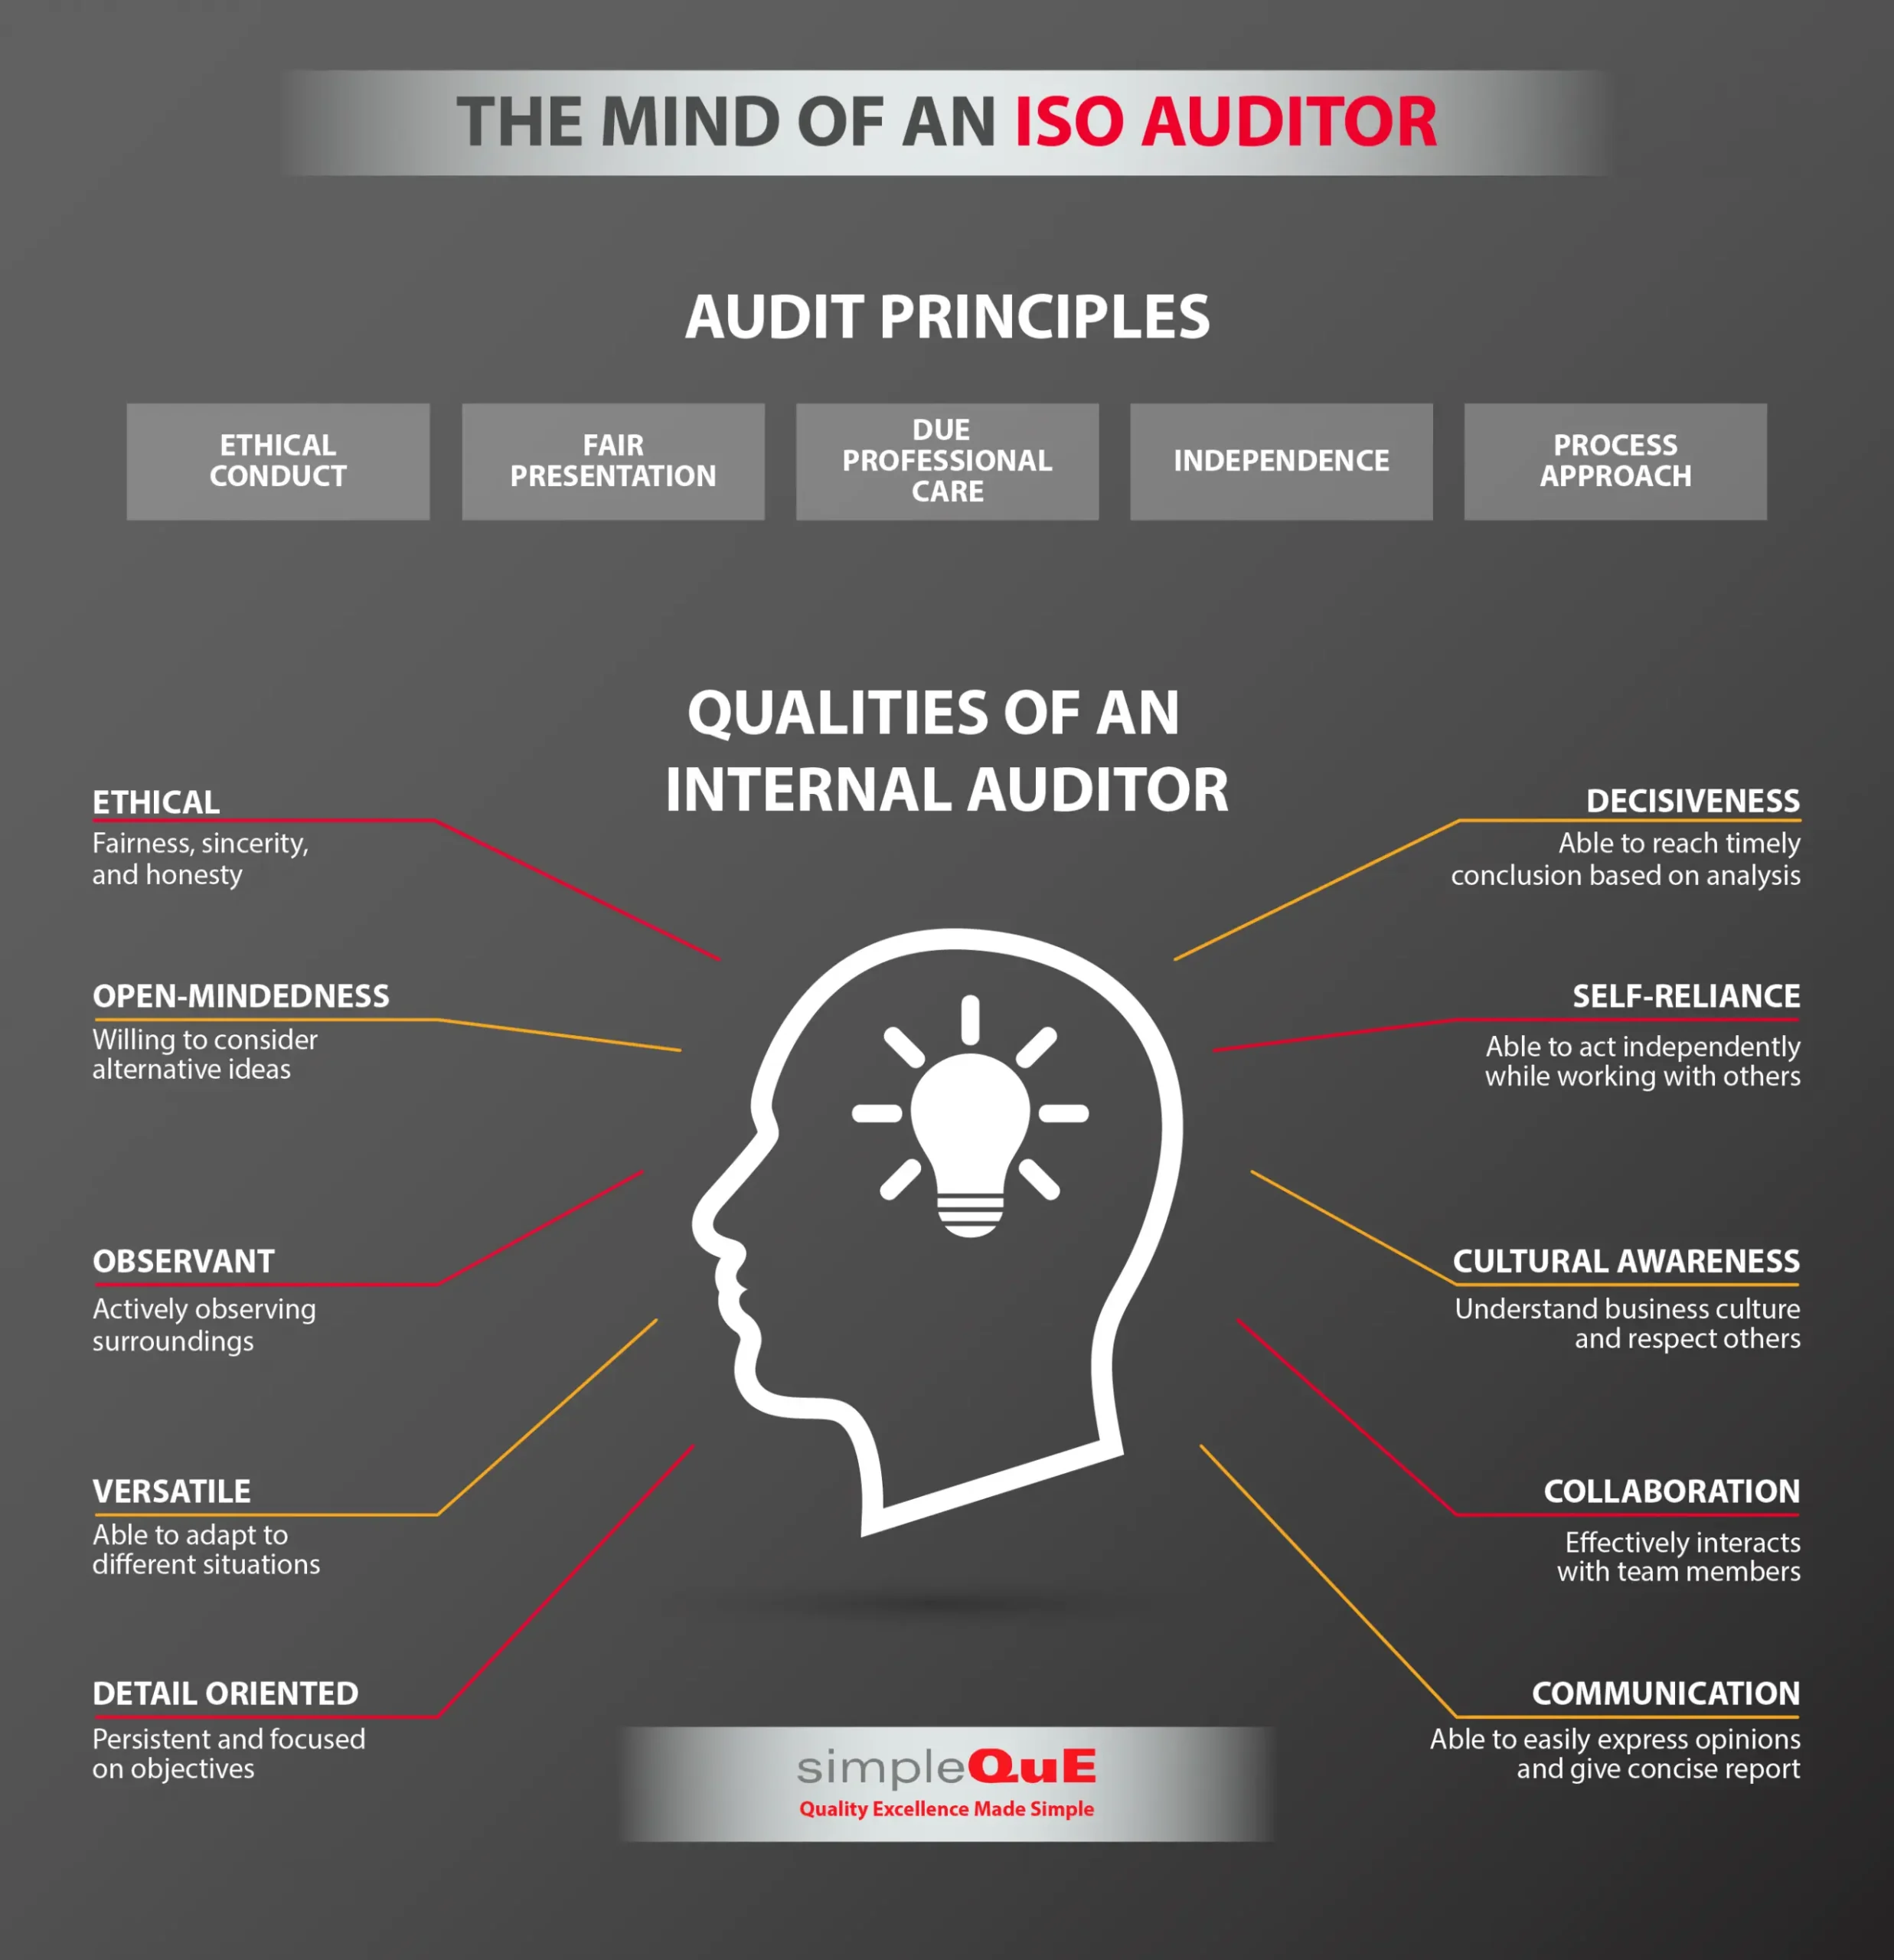 would i make a good auditor - How do I choose a good auditor